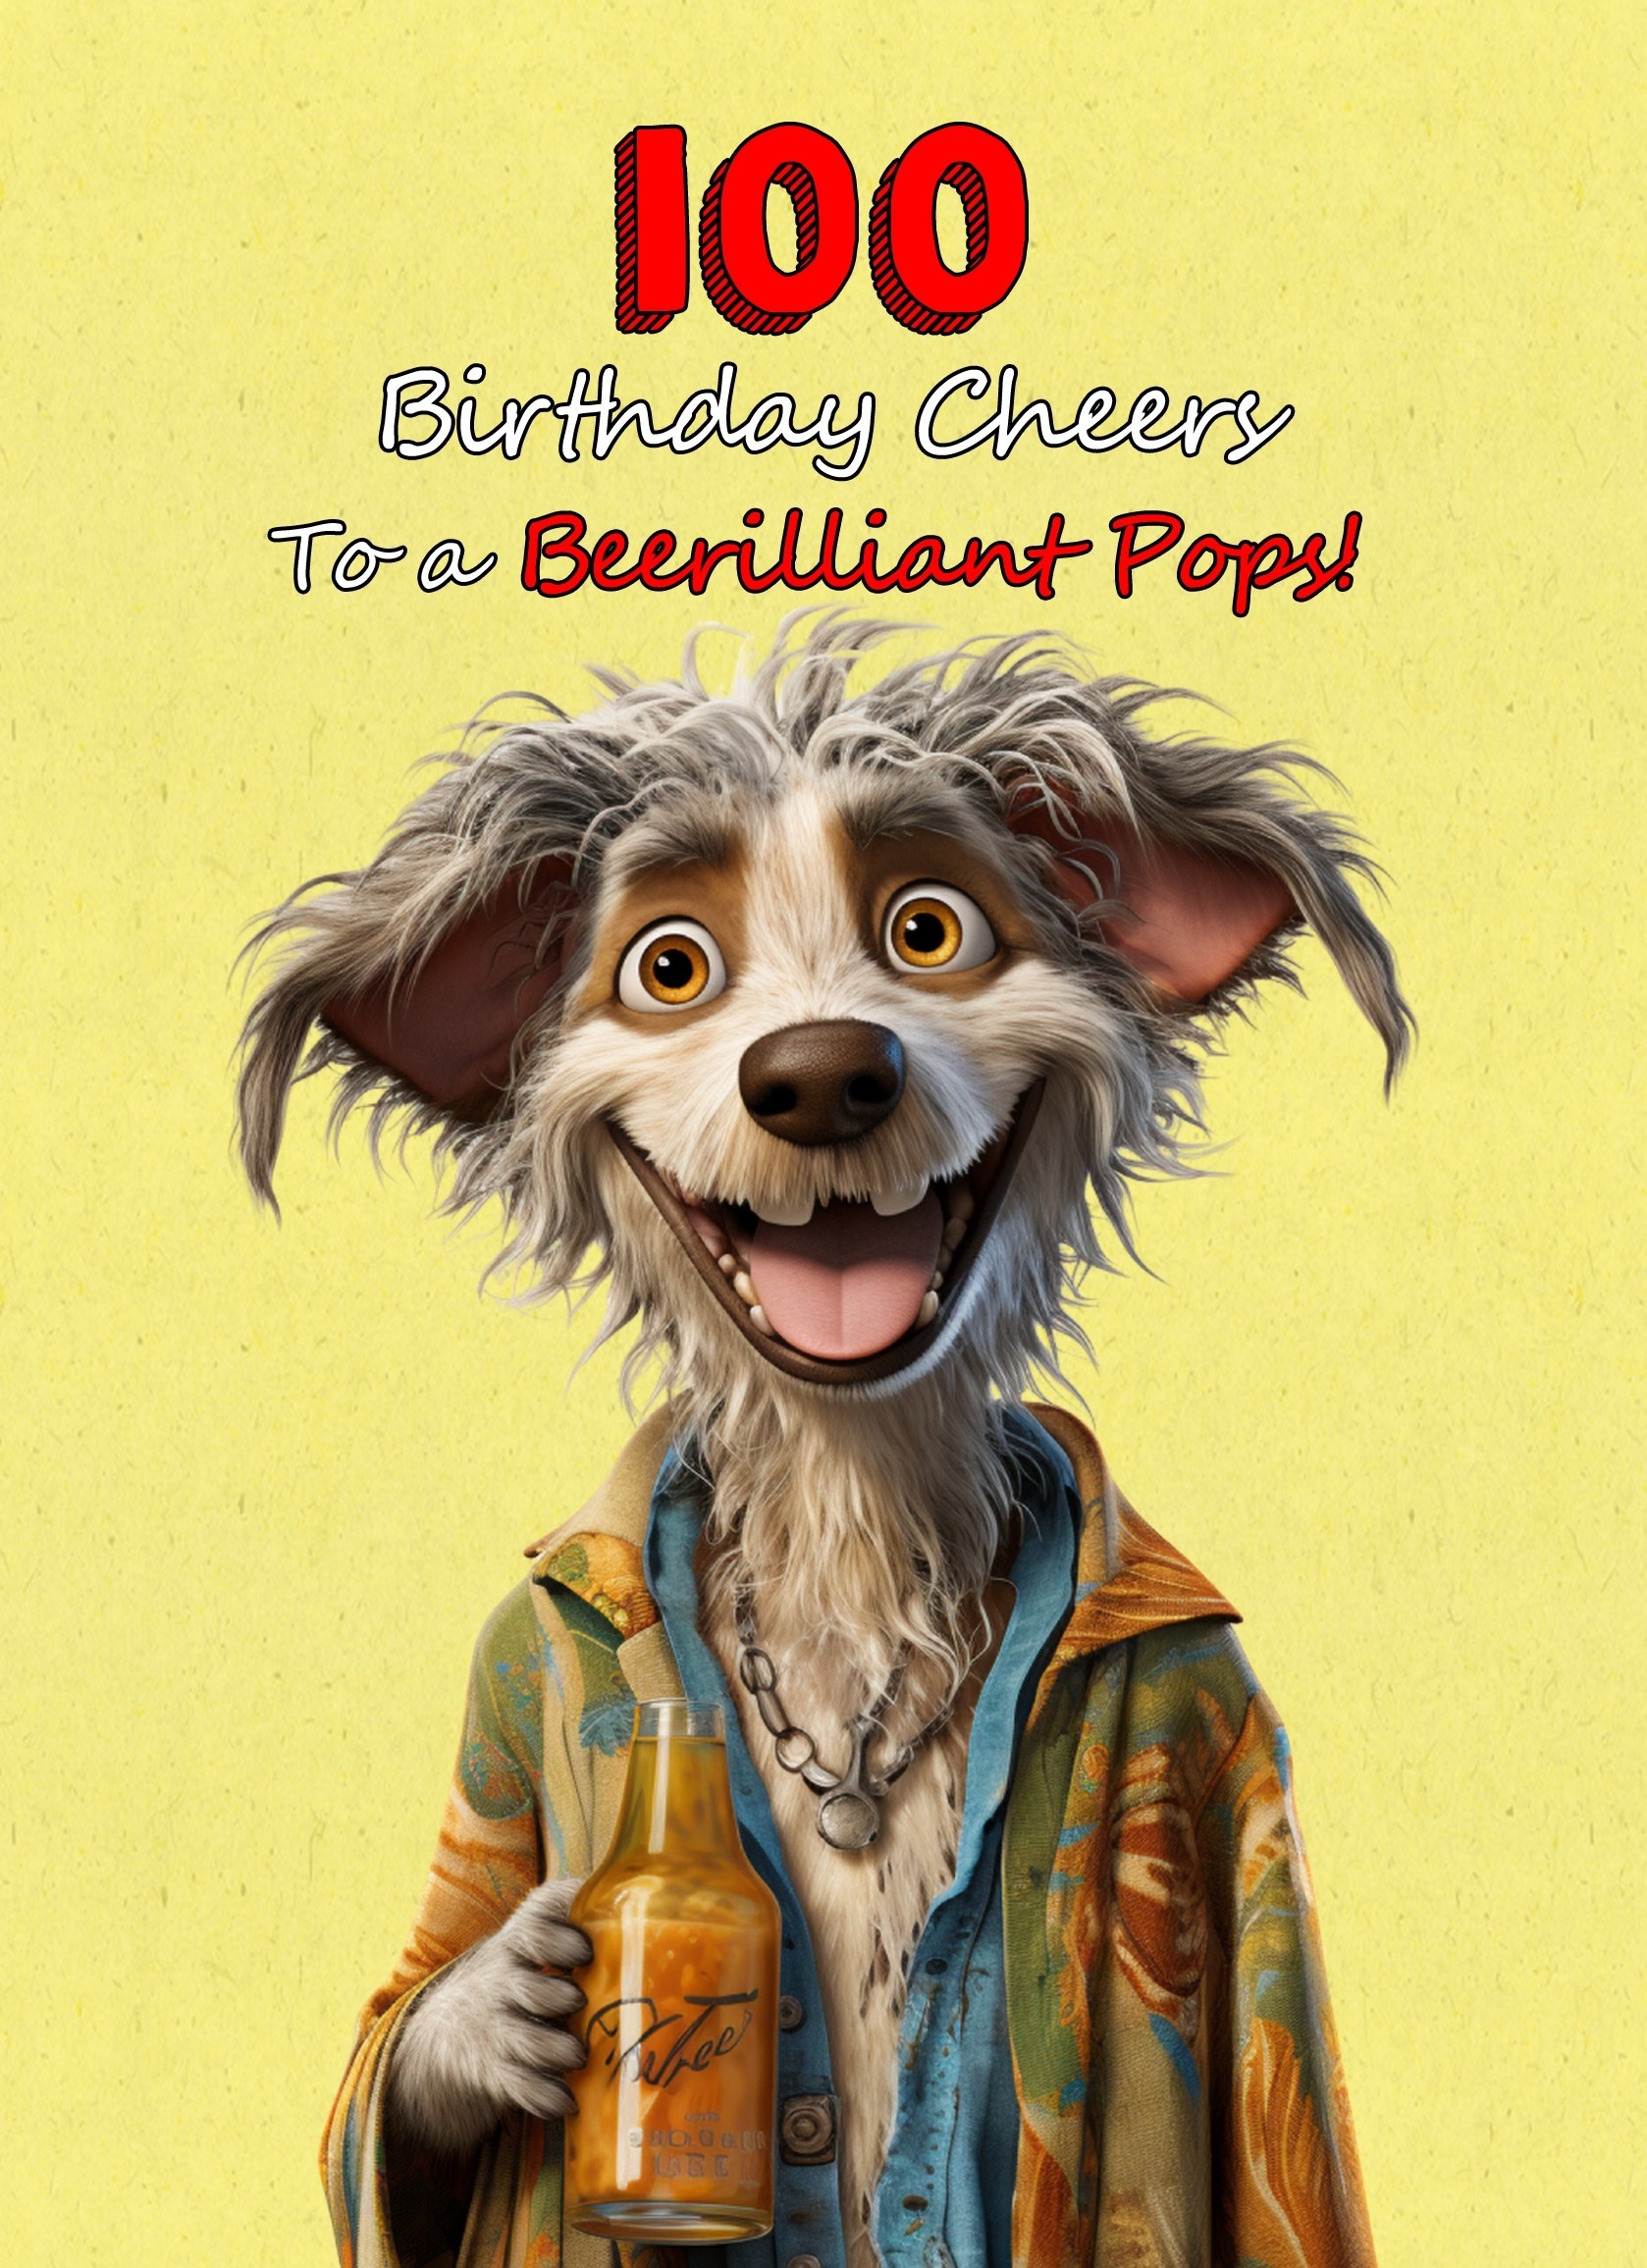 Pops 100th Birthday Card (Funny Beerilliant Birthday Cheers, Design 2)